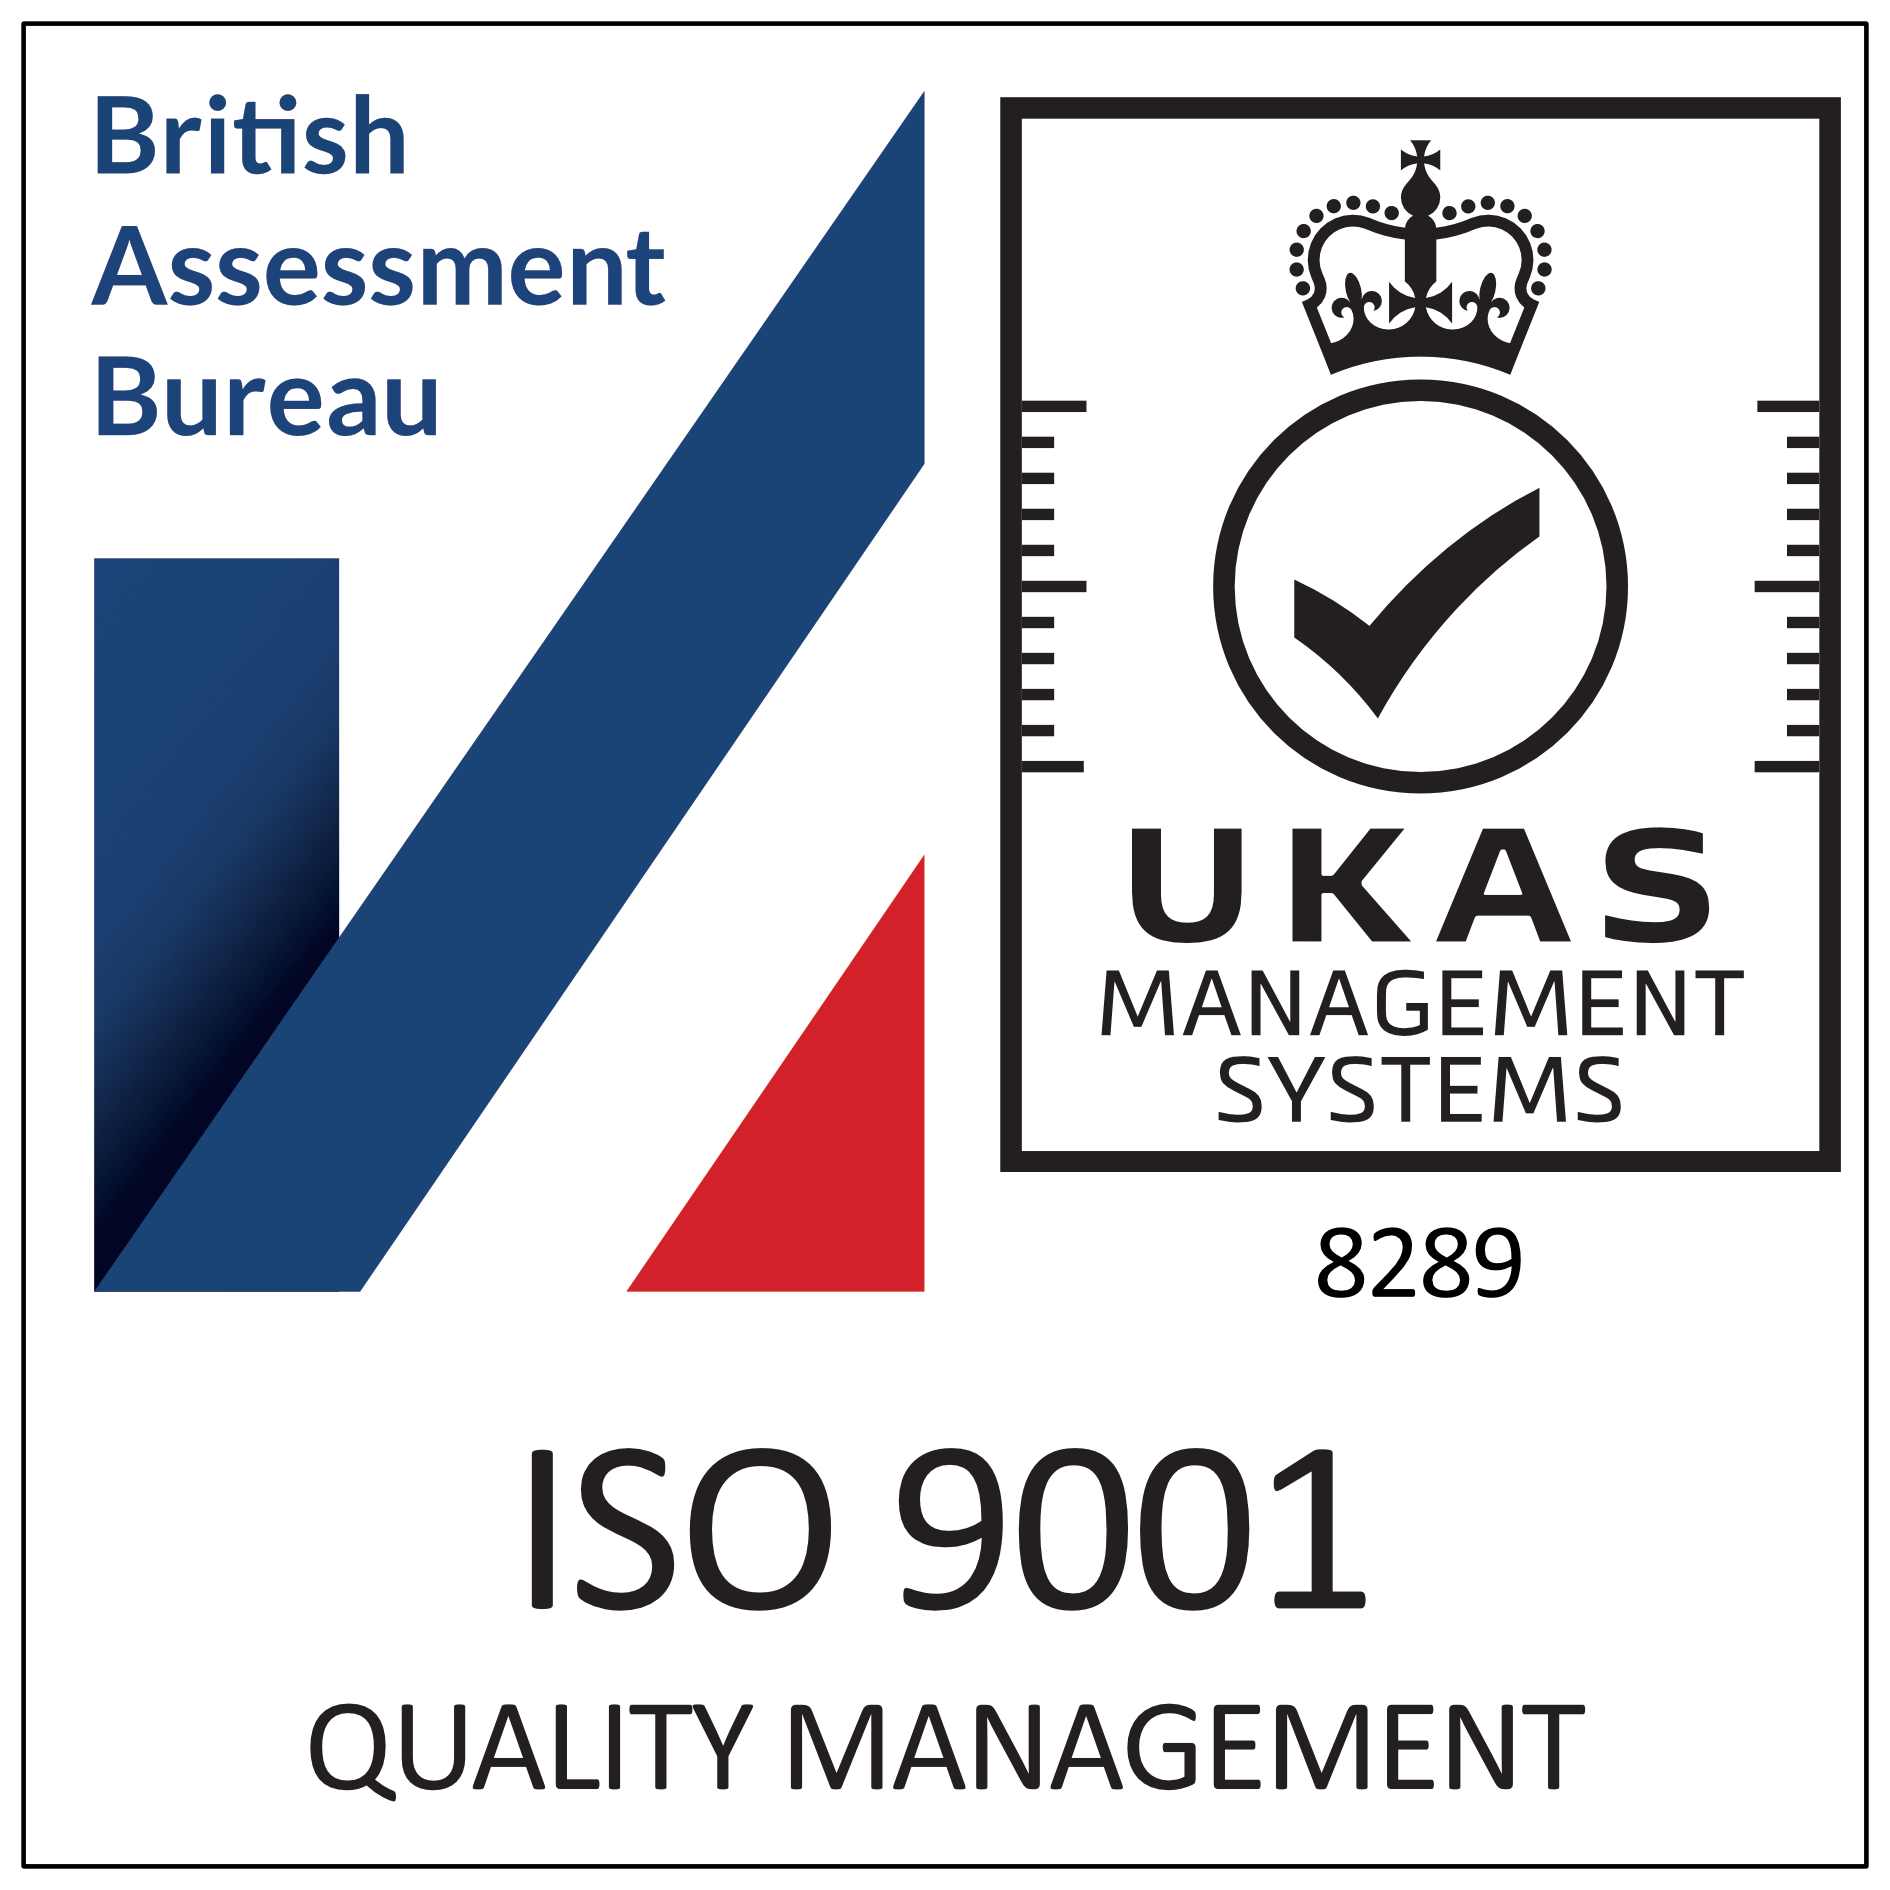 British Assessment Bureau ISO 9001 Certification Badges